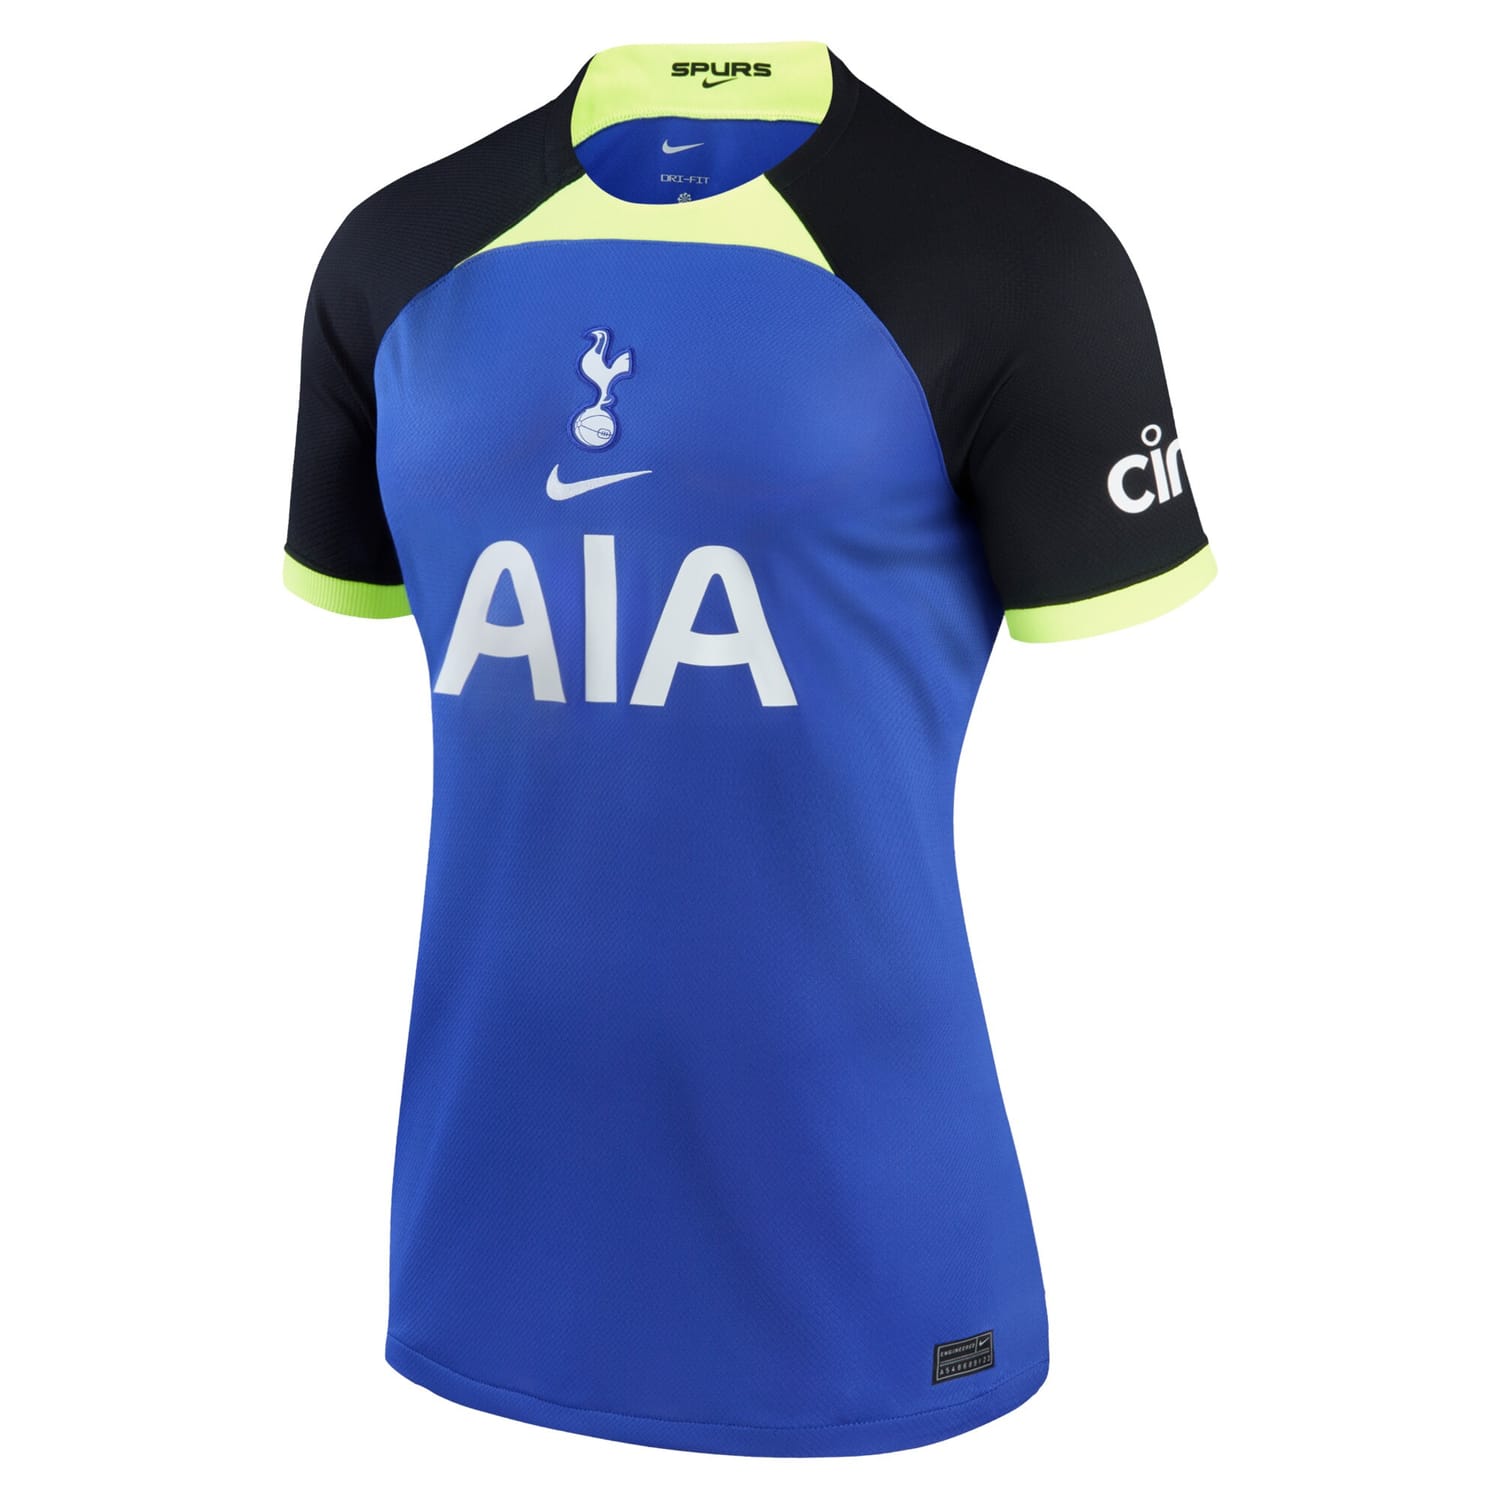 Premier League Tottenham Hotspur Away Jersey Shirt 2022-23 player Richarlison 9 printing for Women